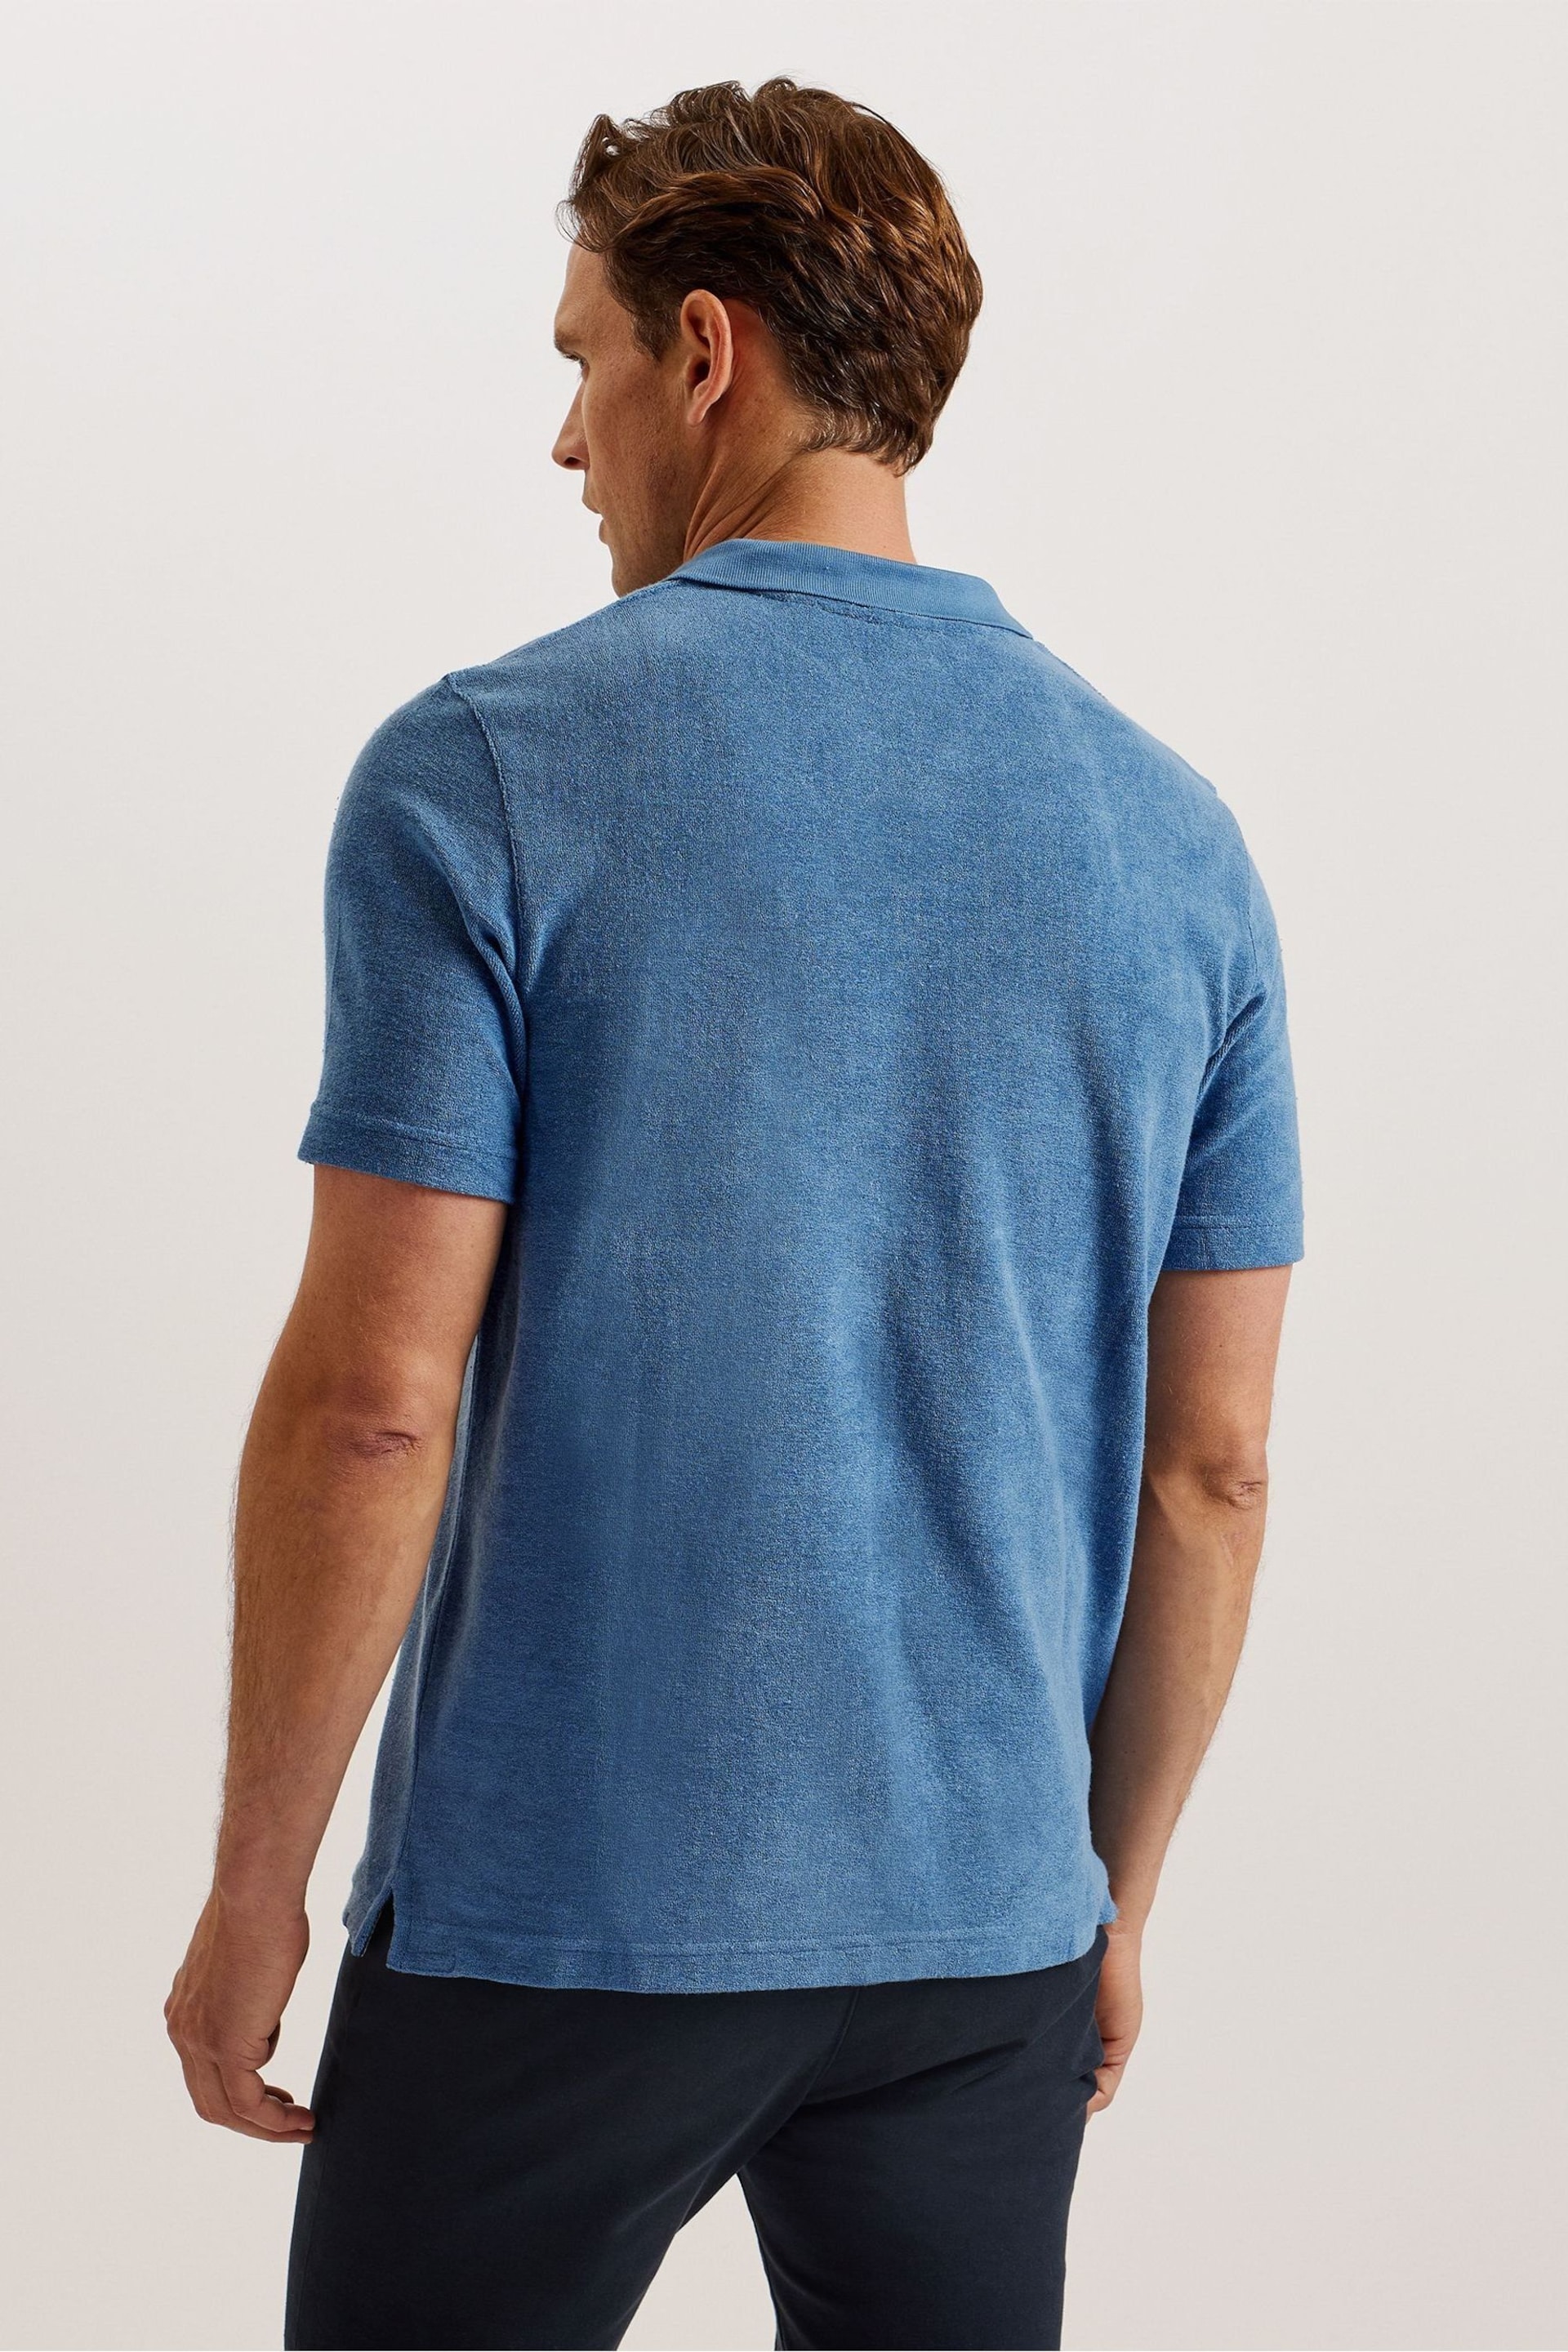 Ted Baker Blue Sndbank Short Sleeved Regular Fit Towelling Polo Shirt - Image 5 of 5